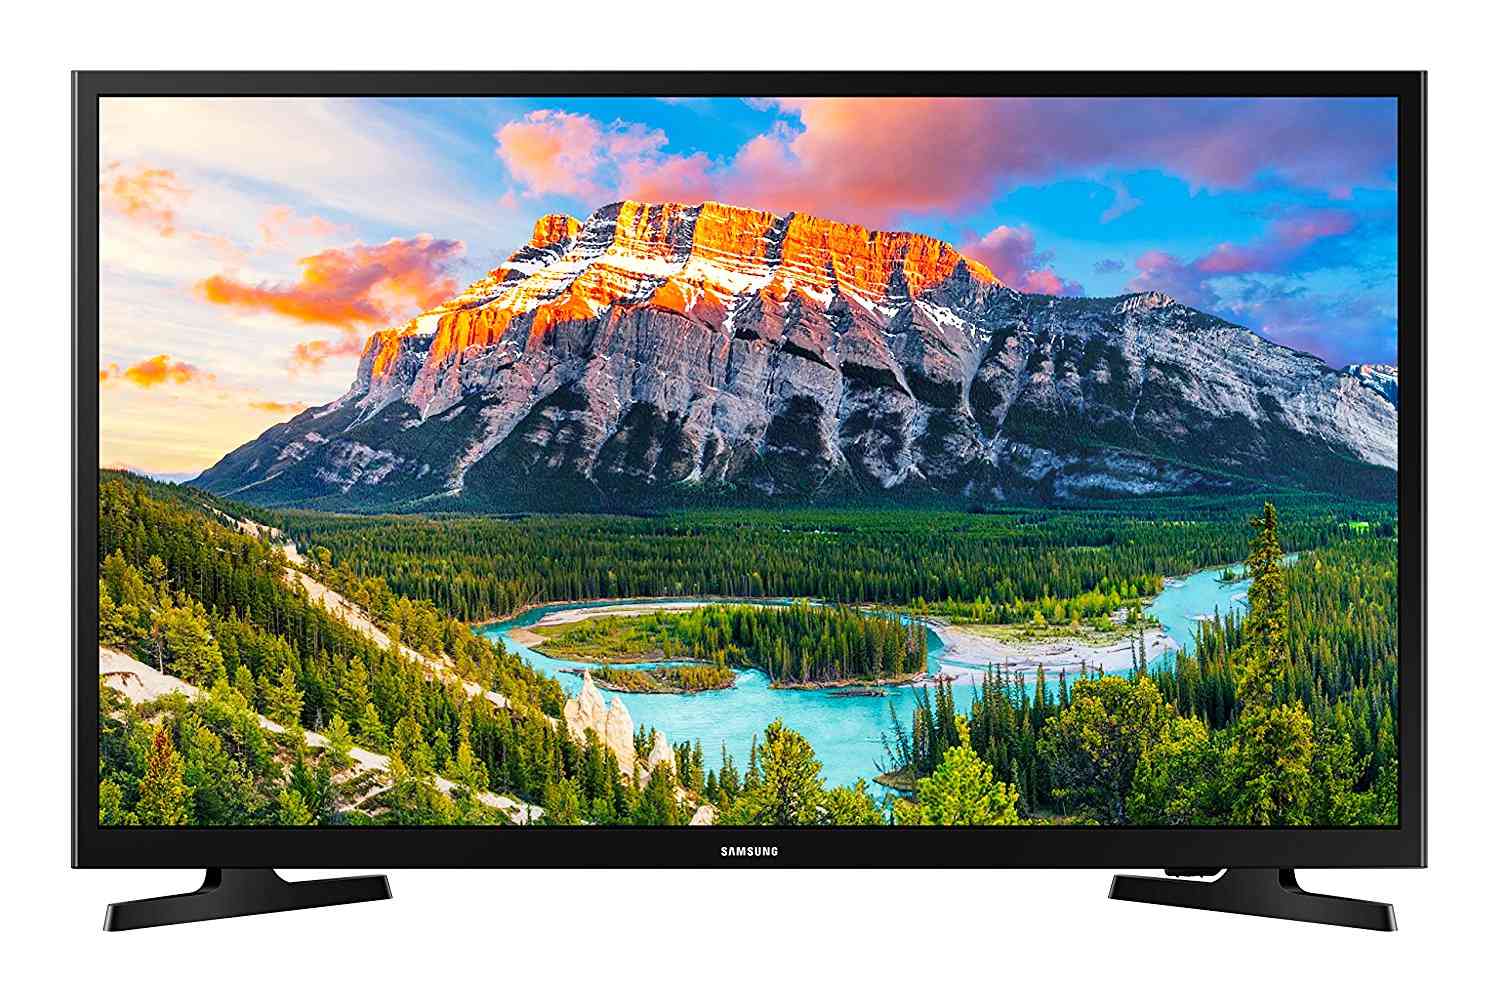 Samsung UN32N5300 1080p LED/LCD Smart TV